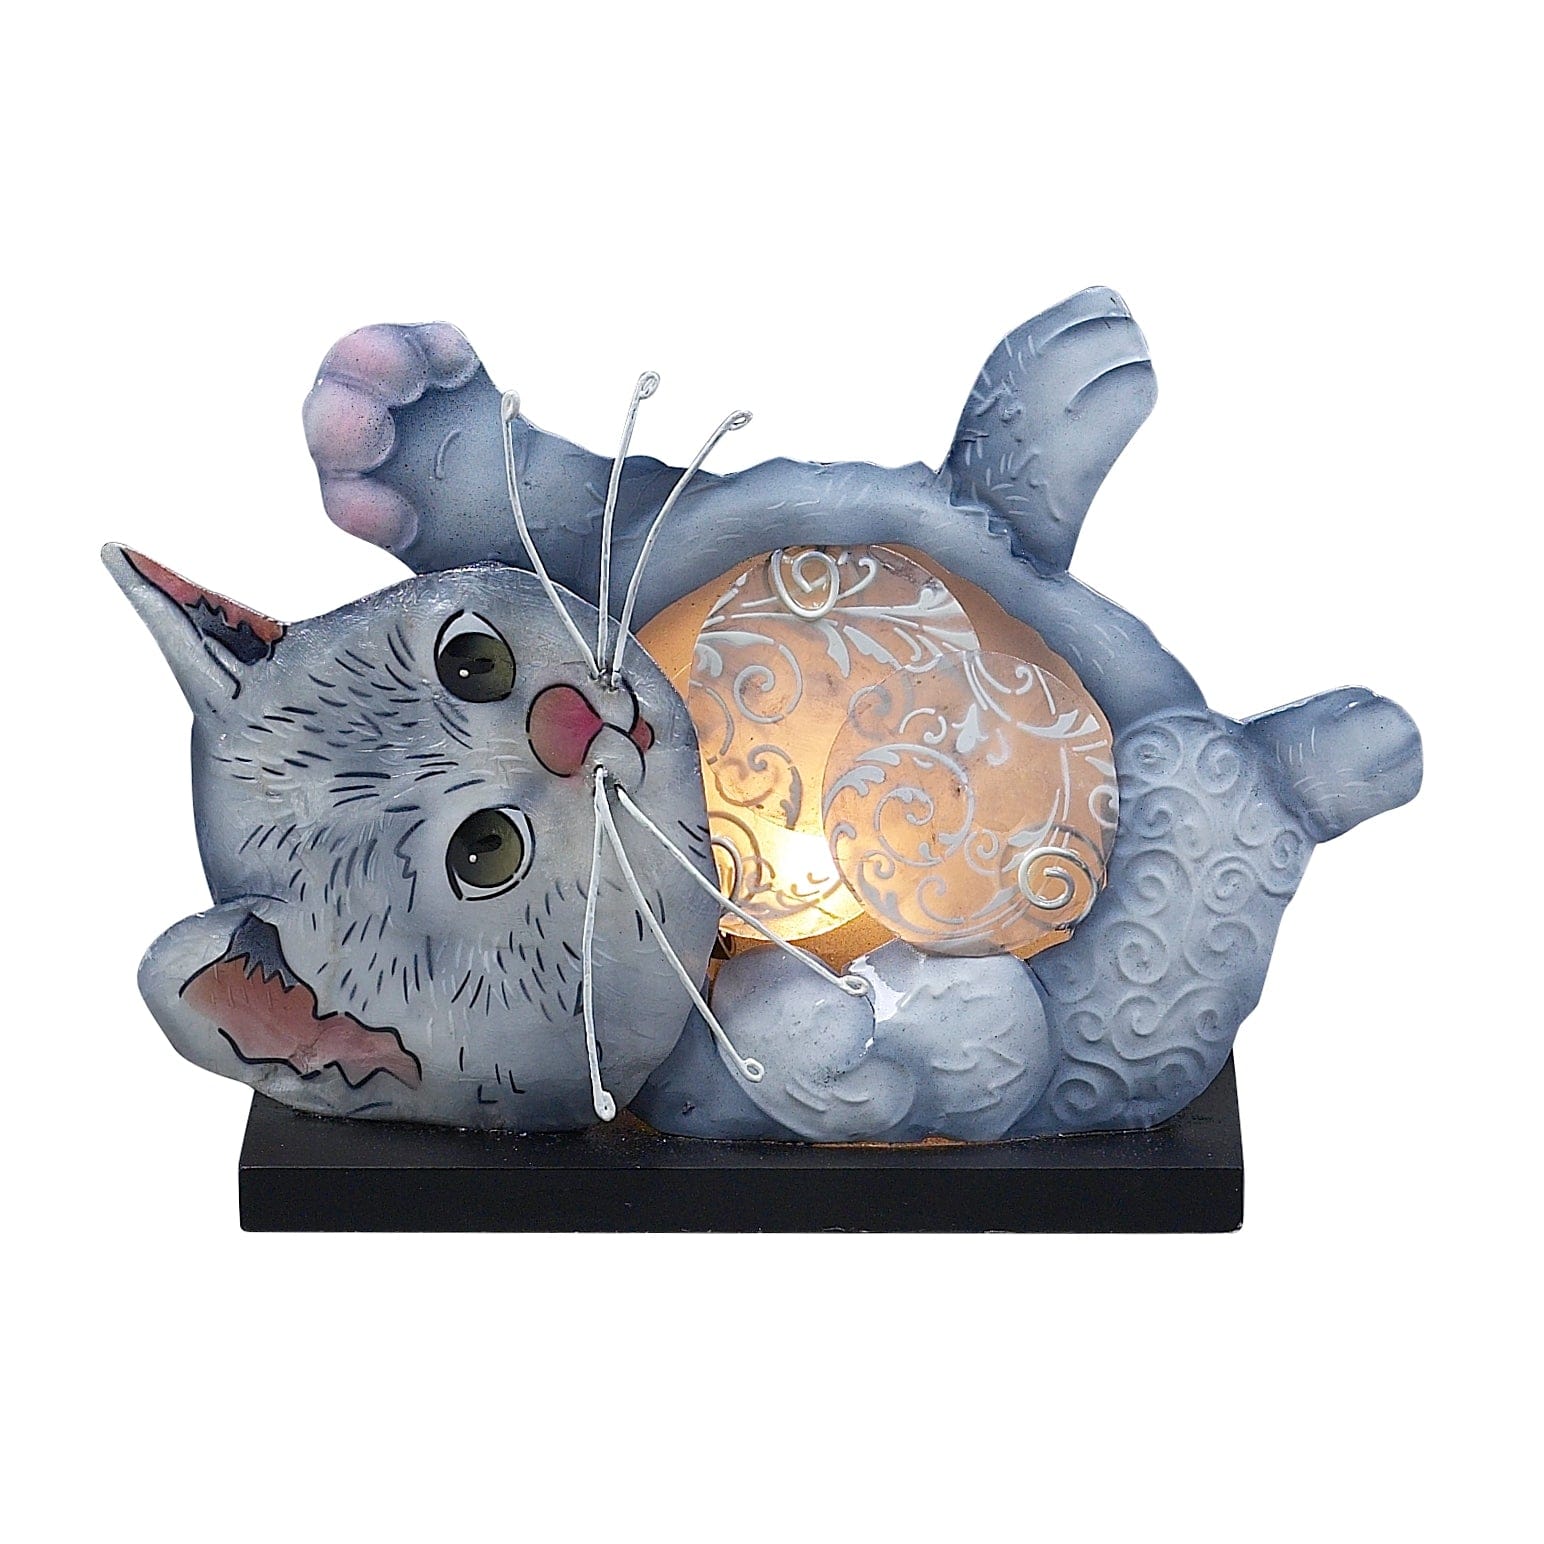 Kitten Decorative Lamp or Night Light Handmade of Capiz*